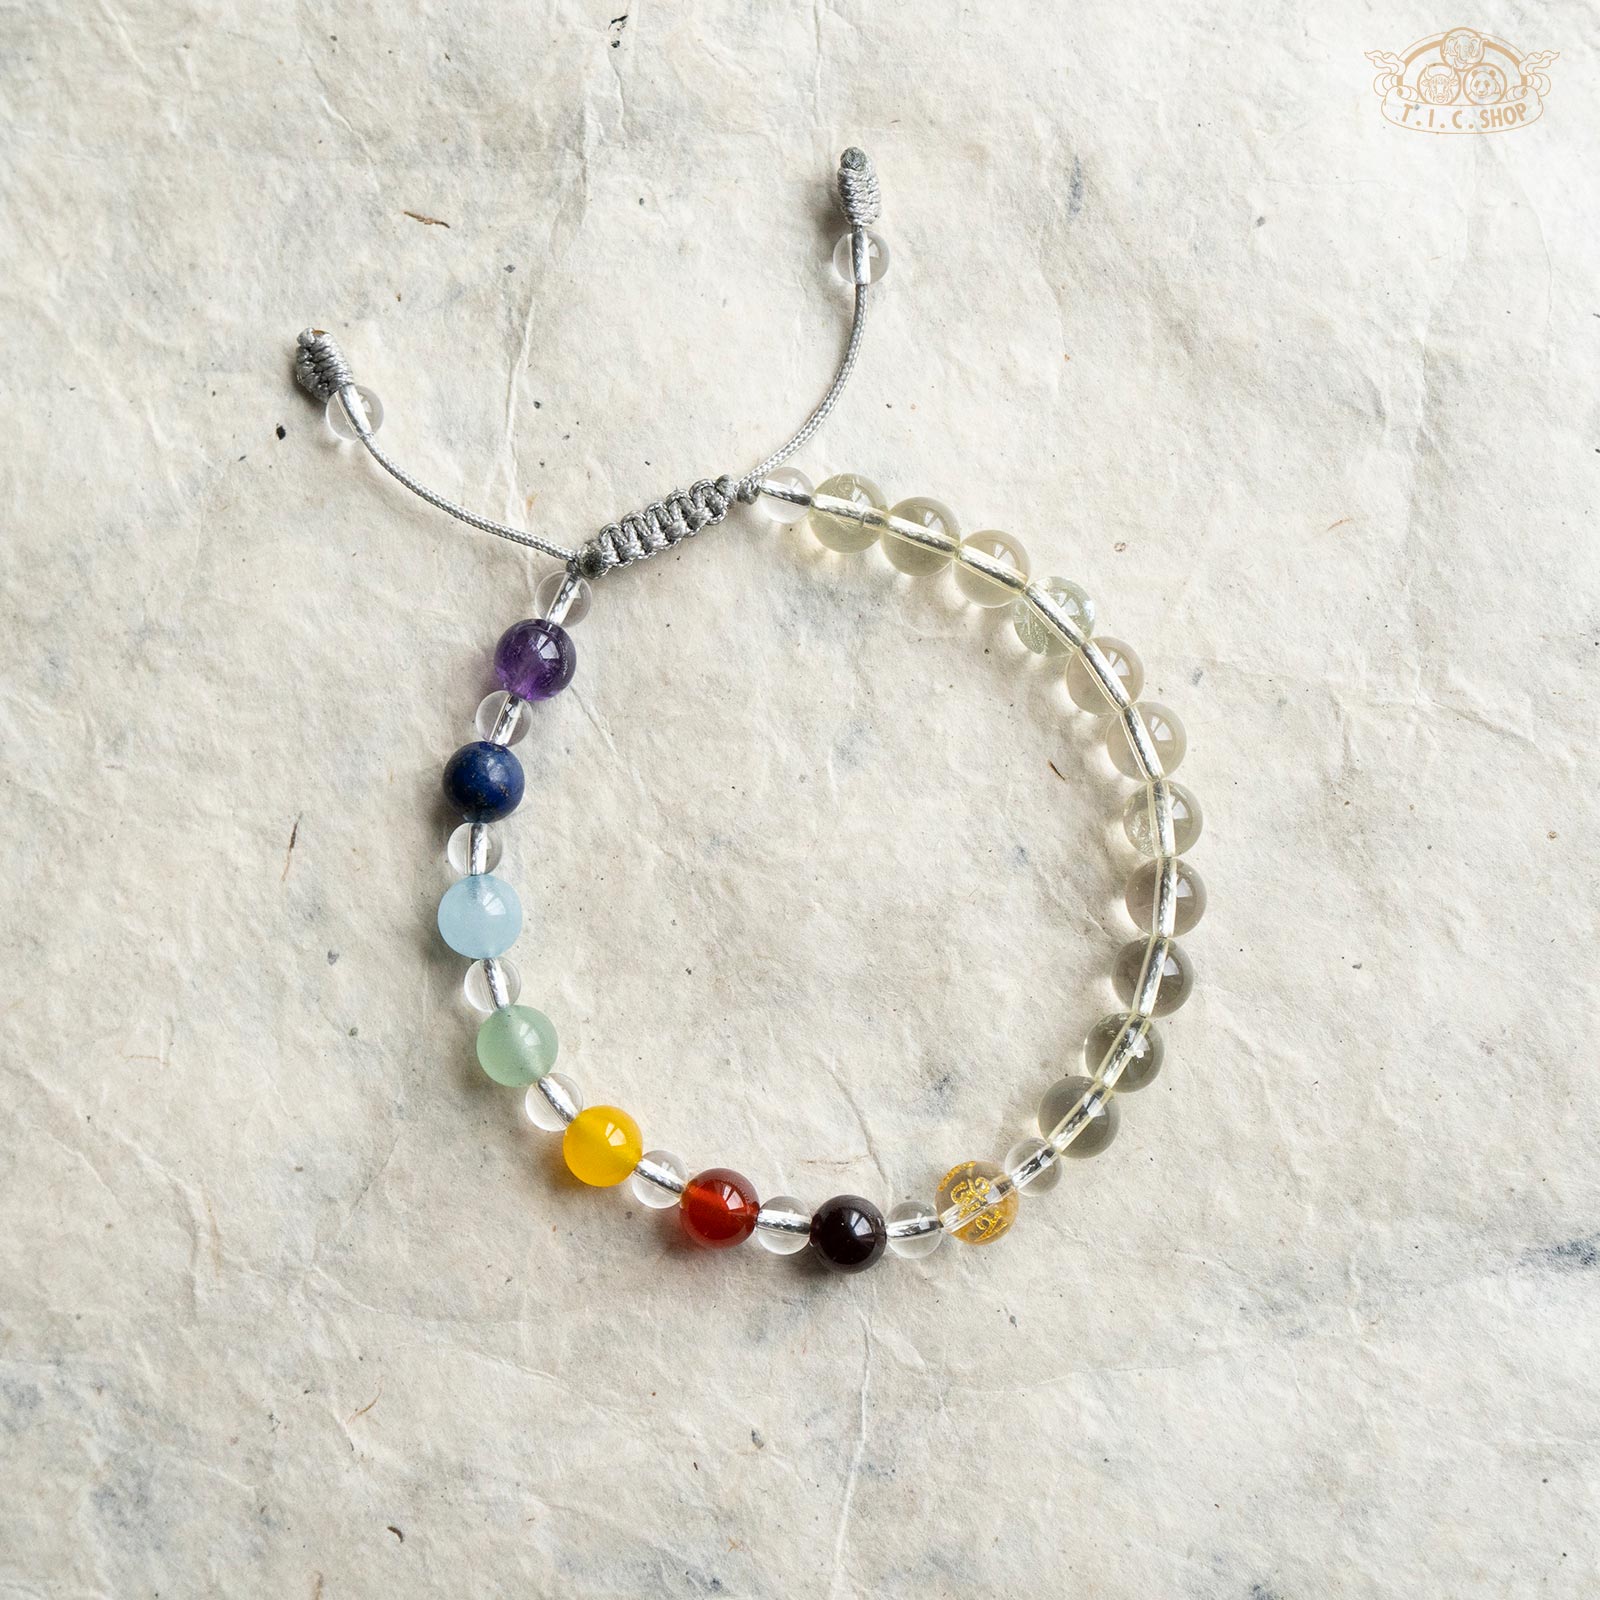 Seven Chakra 6mm Beads Bracelet with OM Mantra